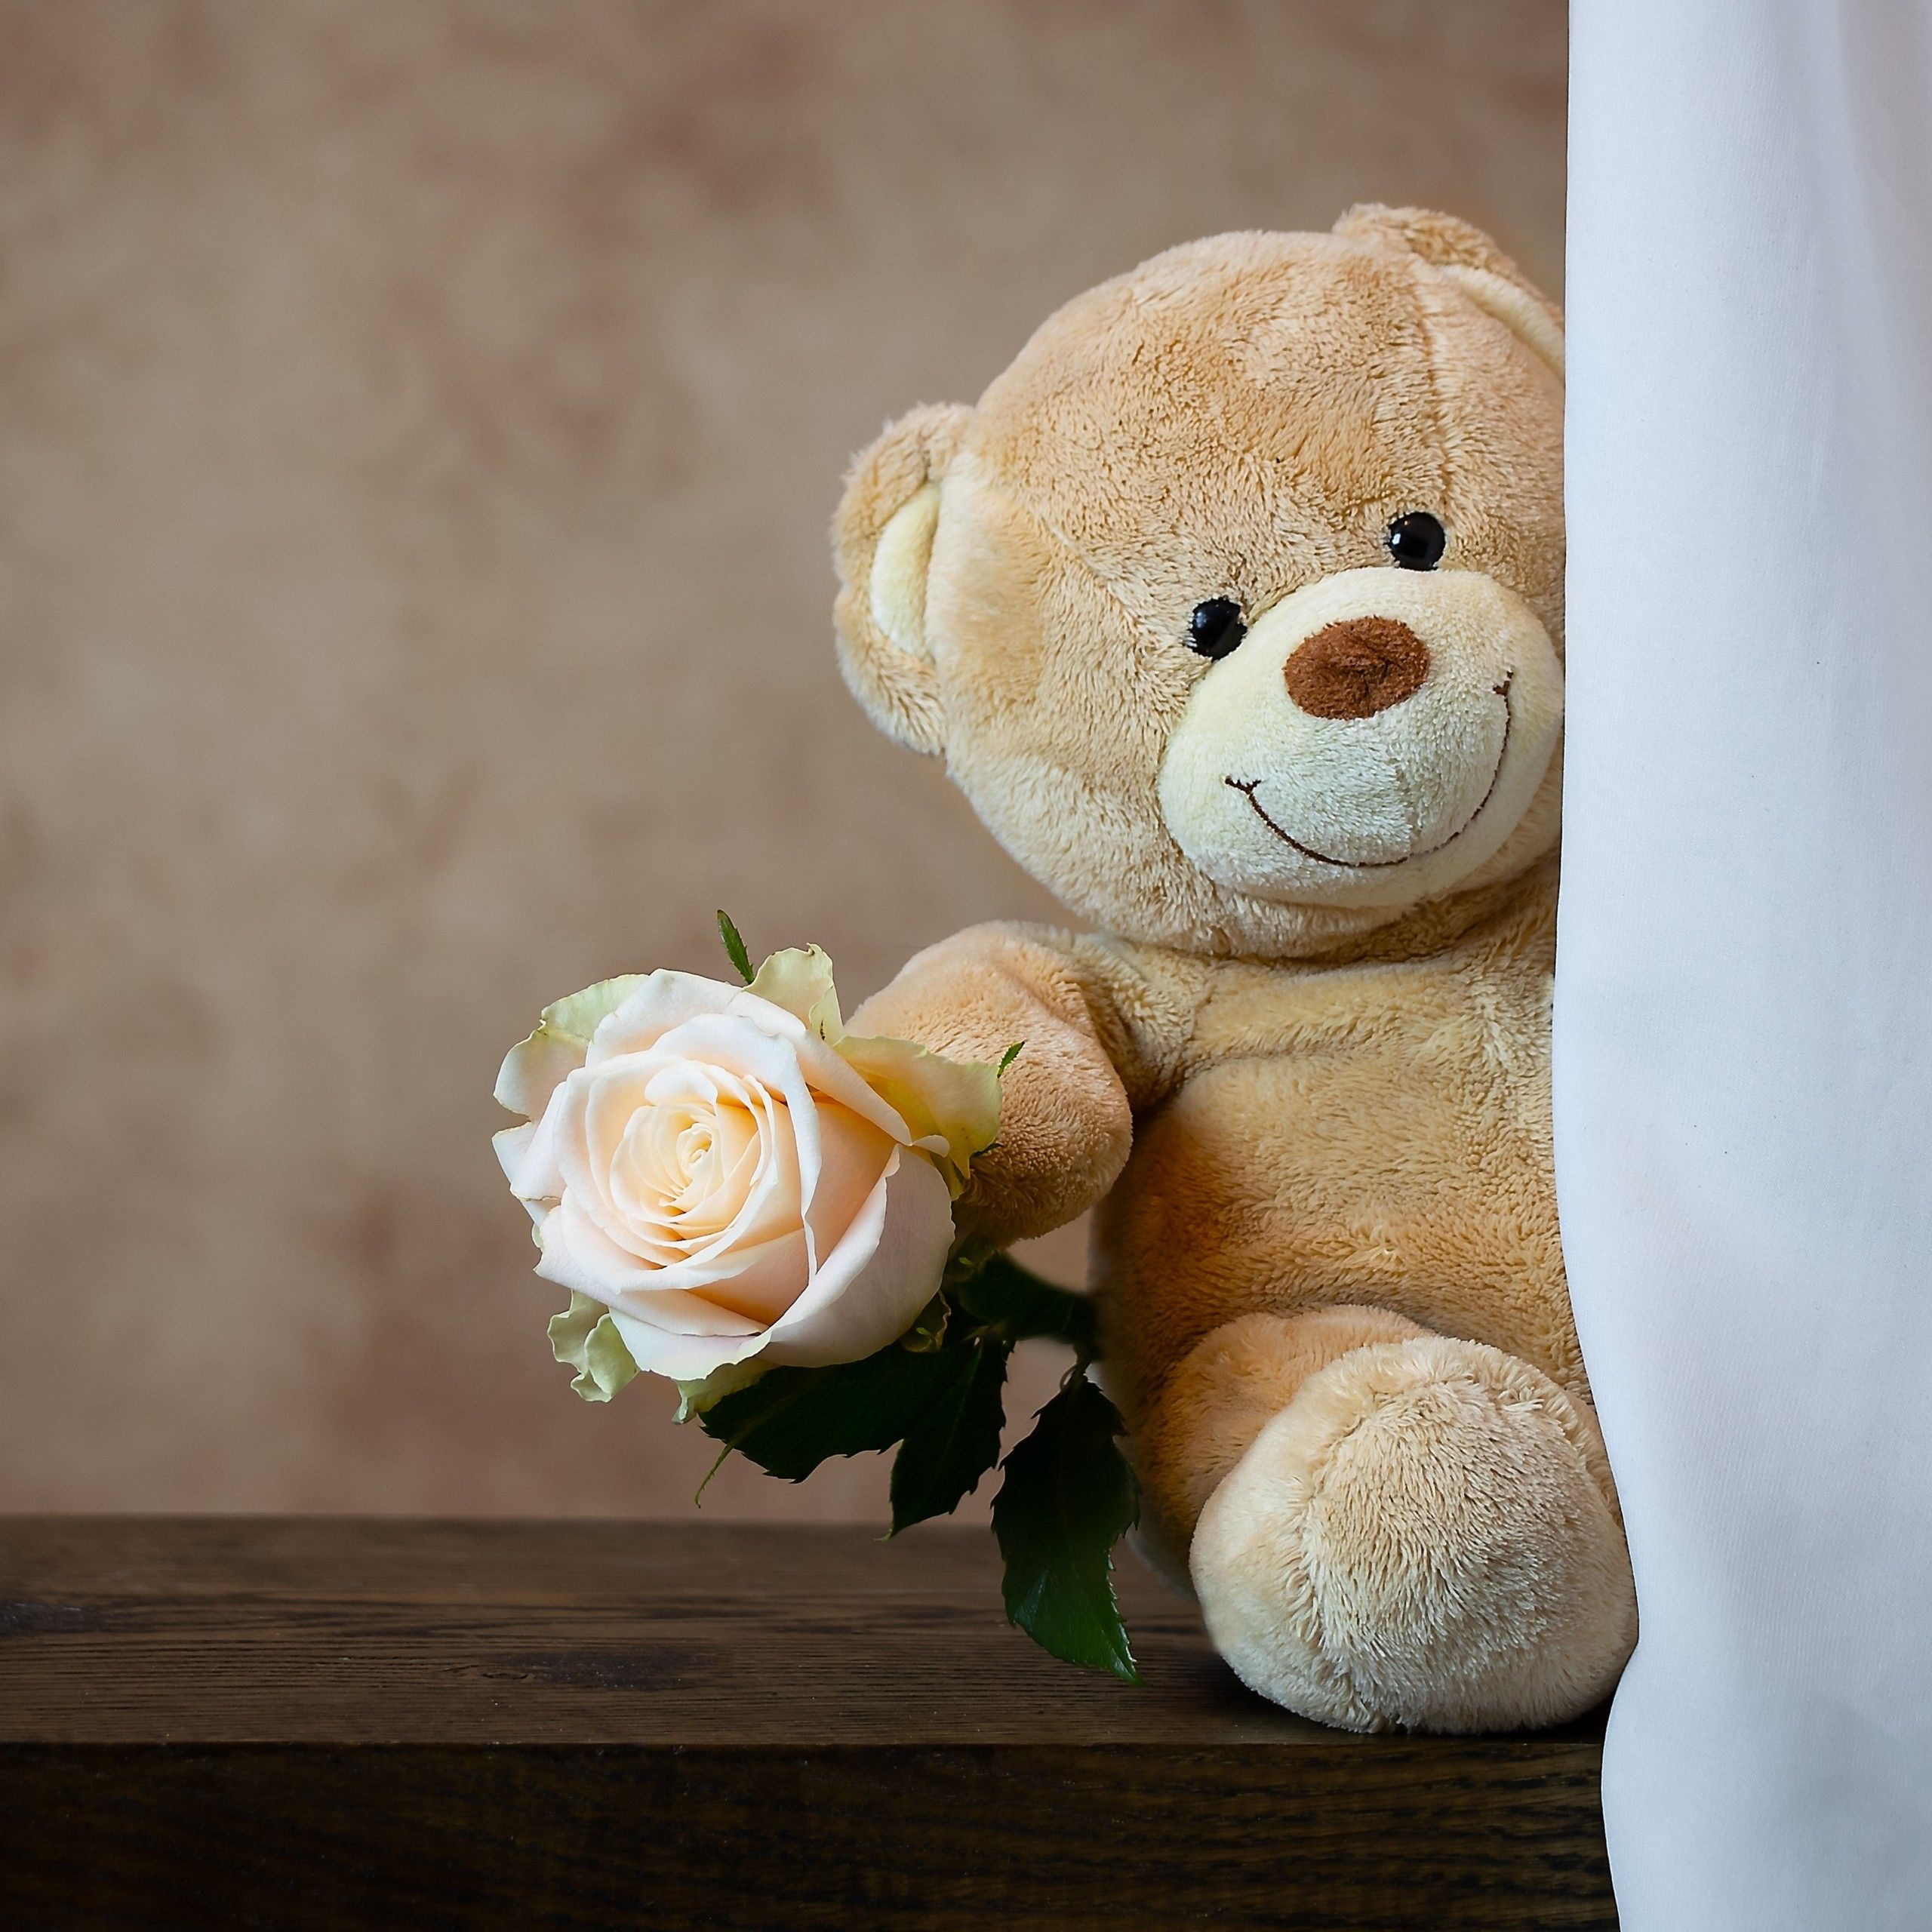 Teddy bear 4K Wallpaper, Rose, Cute toy .4kwallpaper.com